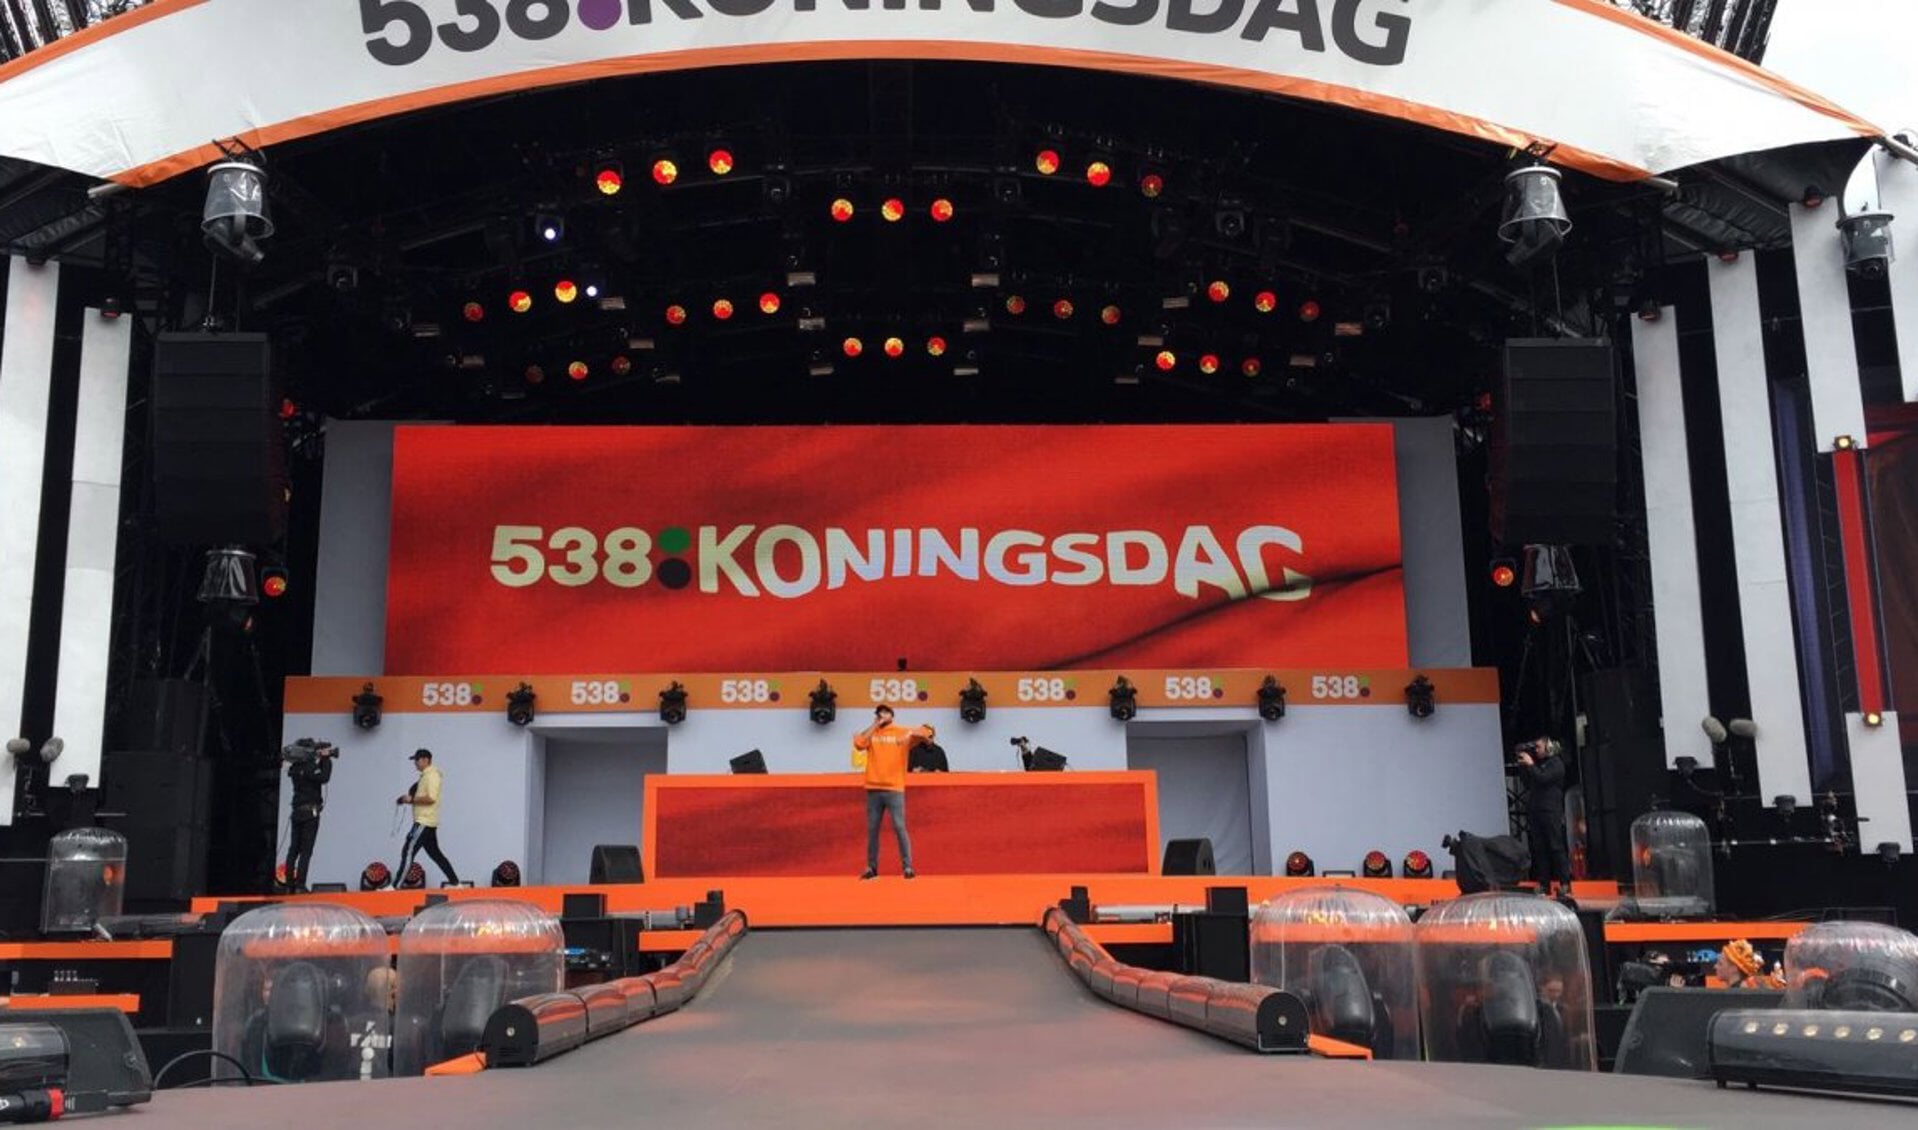 538Koningsdag begonnen in Breda (plus line-up)